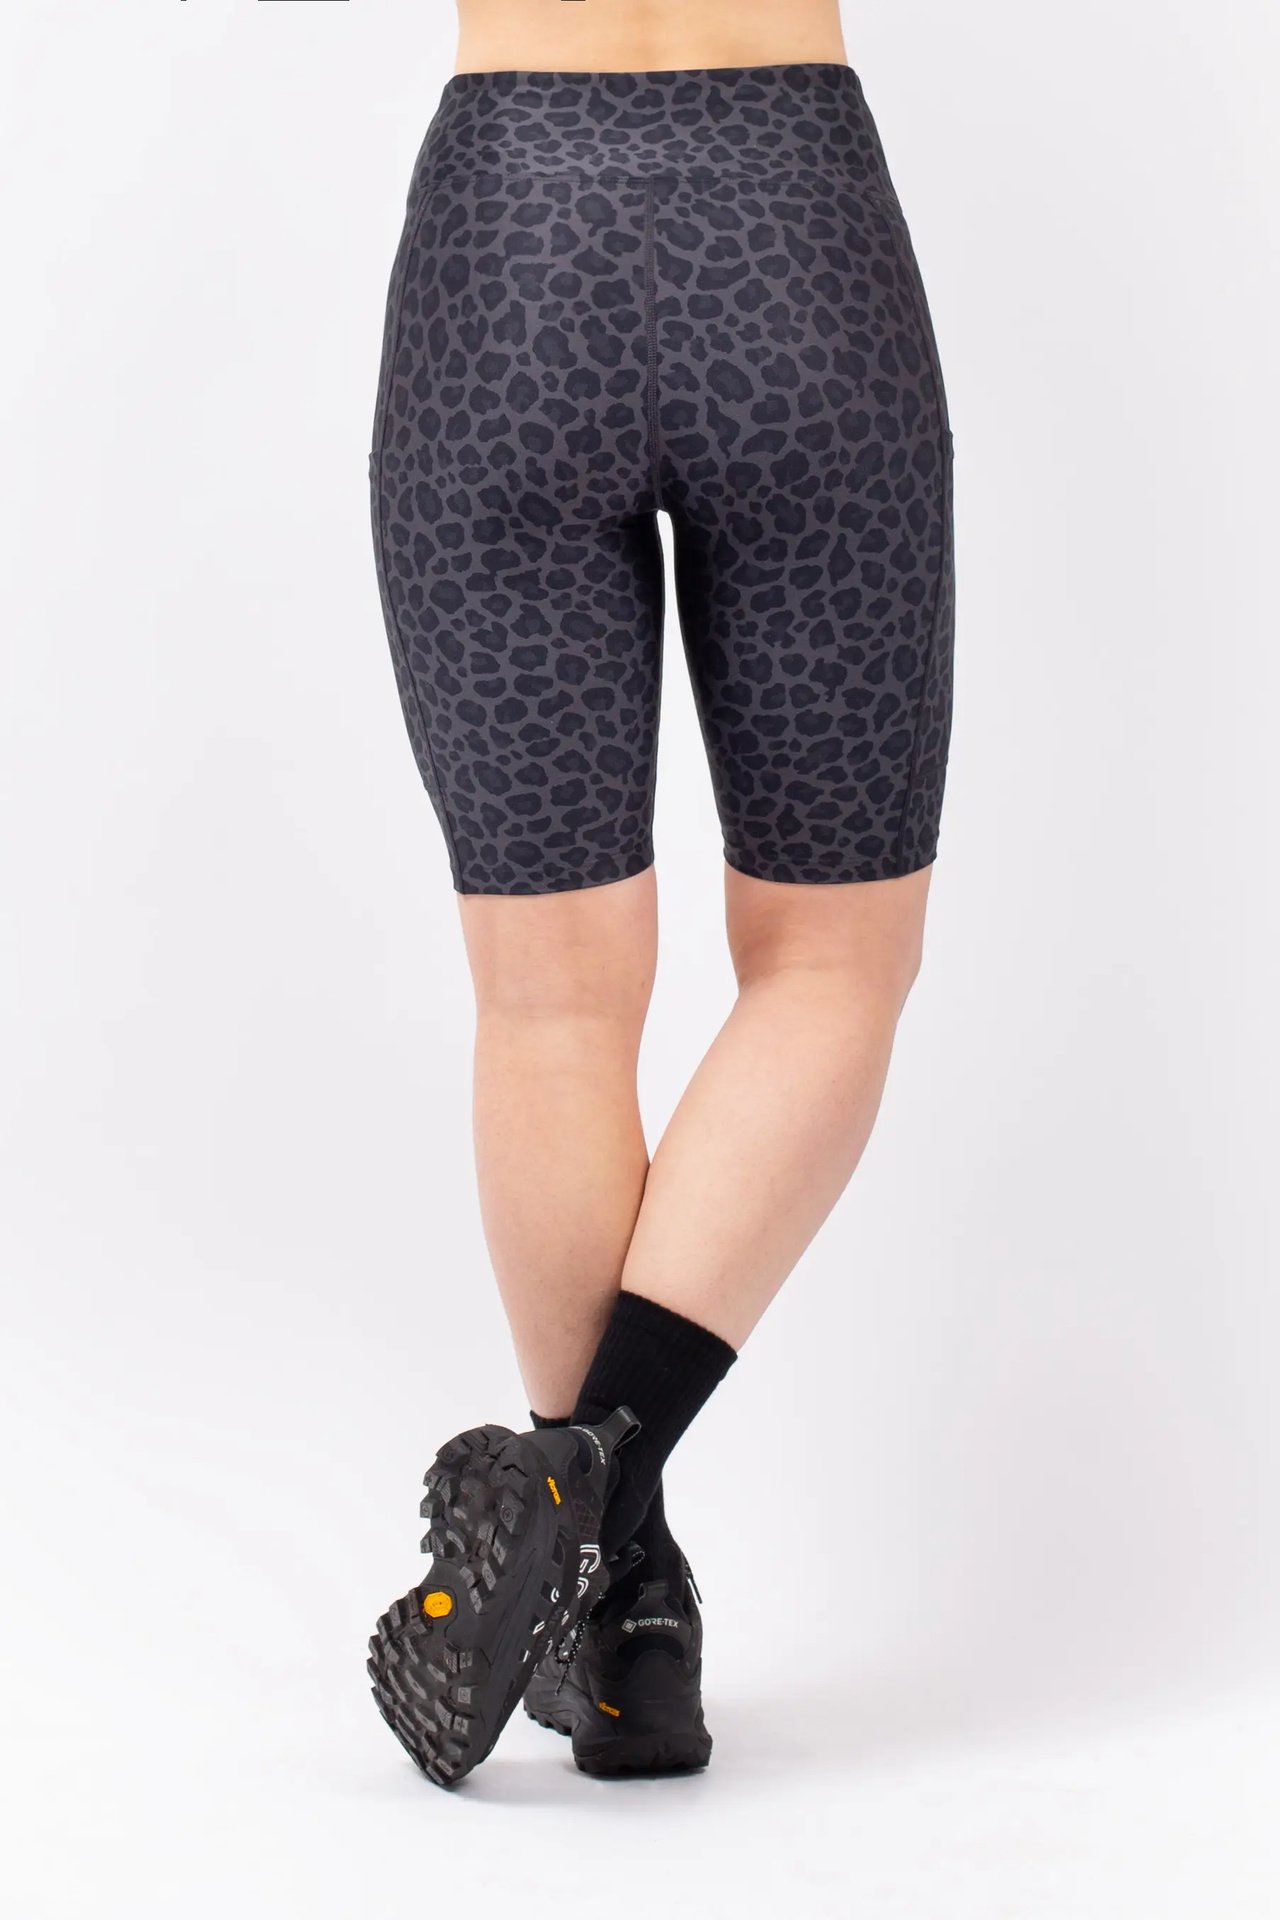 Venture Biker Shorts - Black Leopard | XS